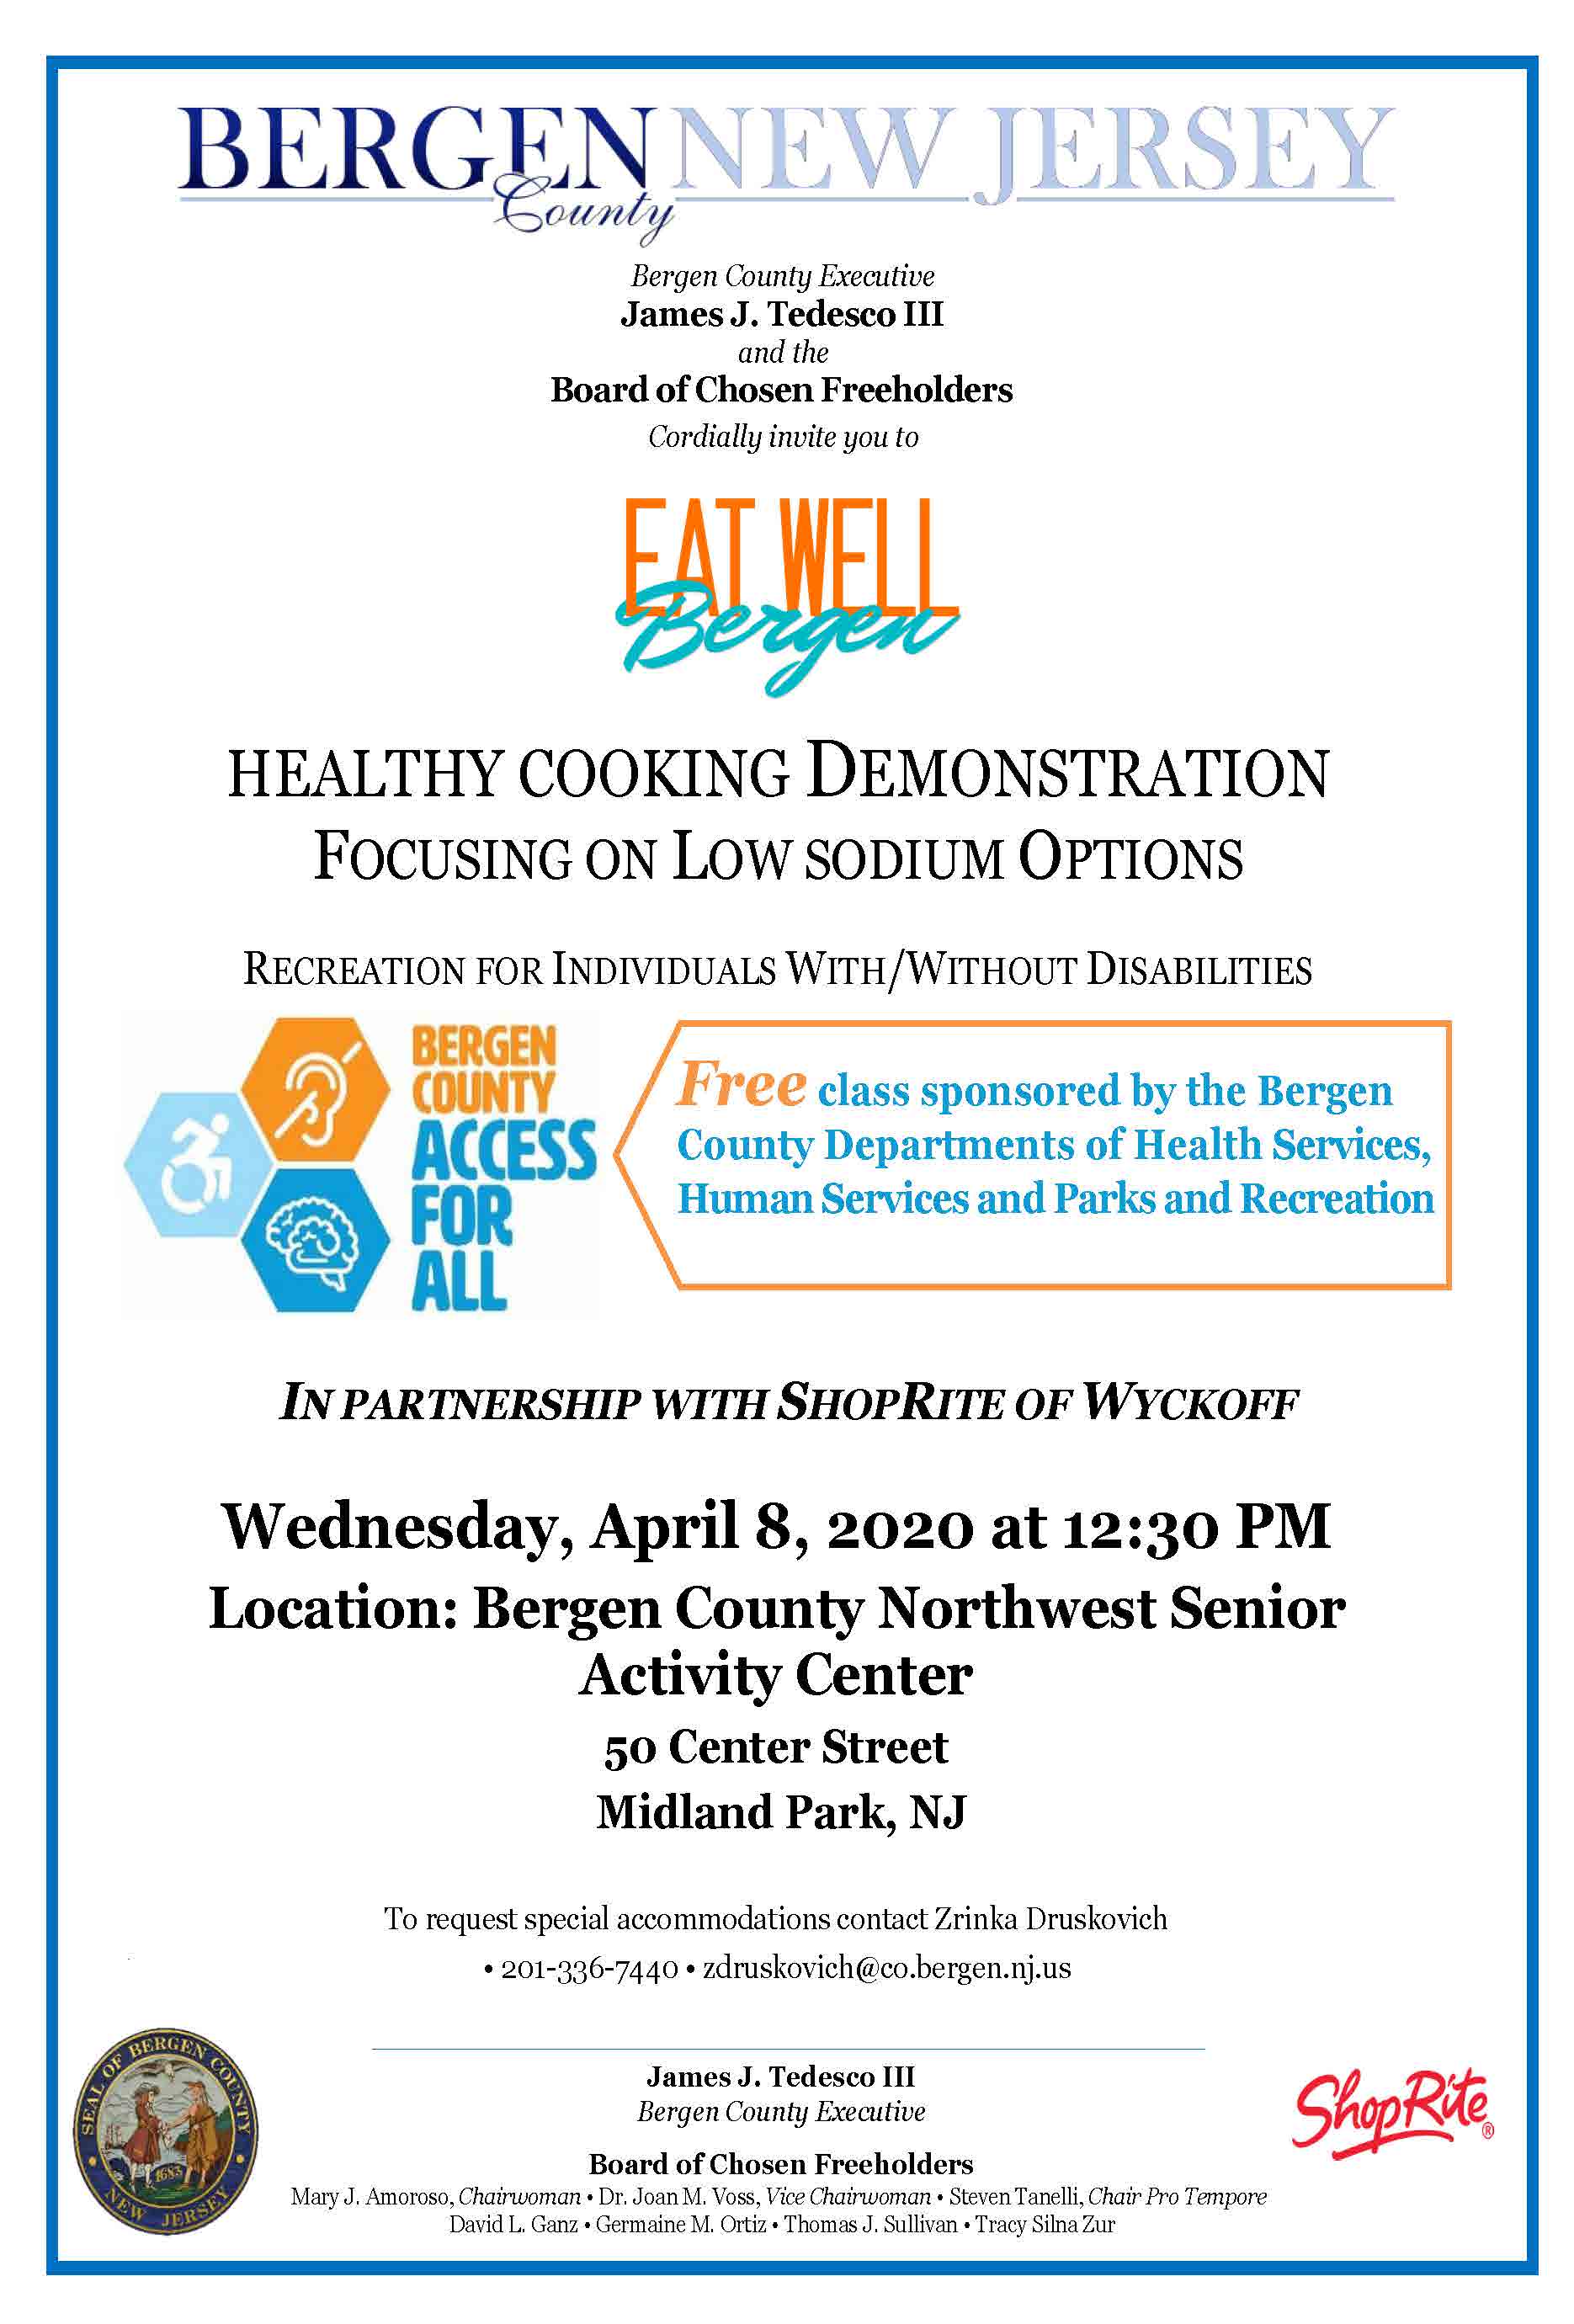 Promotional Flyer Midland Park Senior Center healthy cooking 01312020